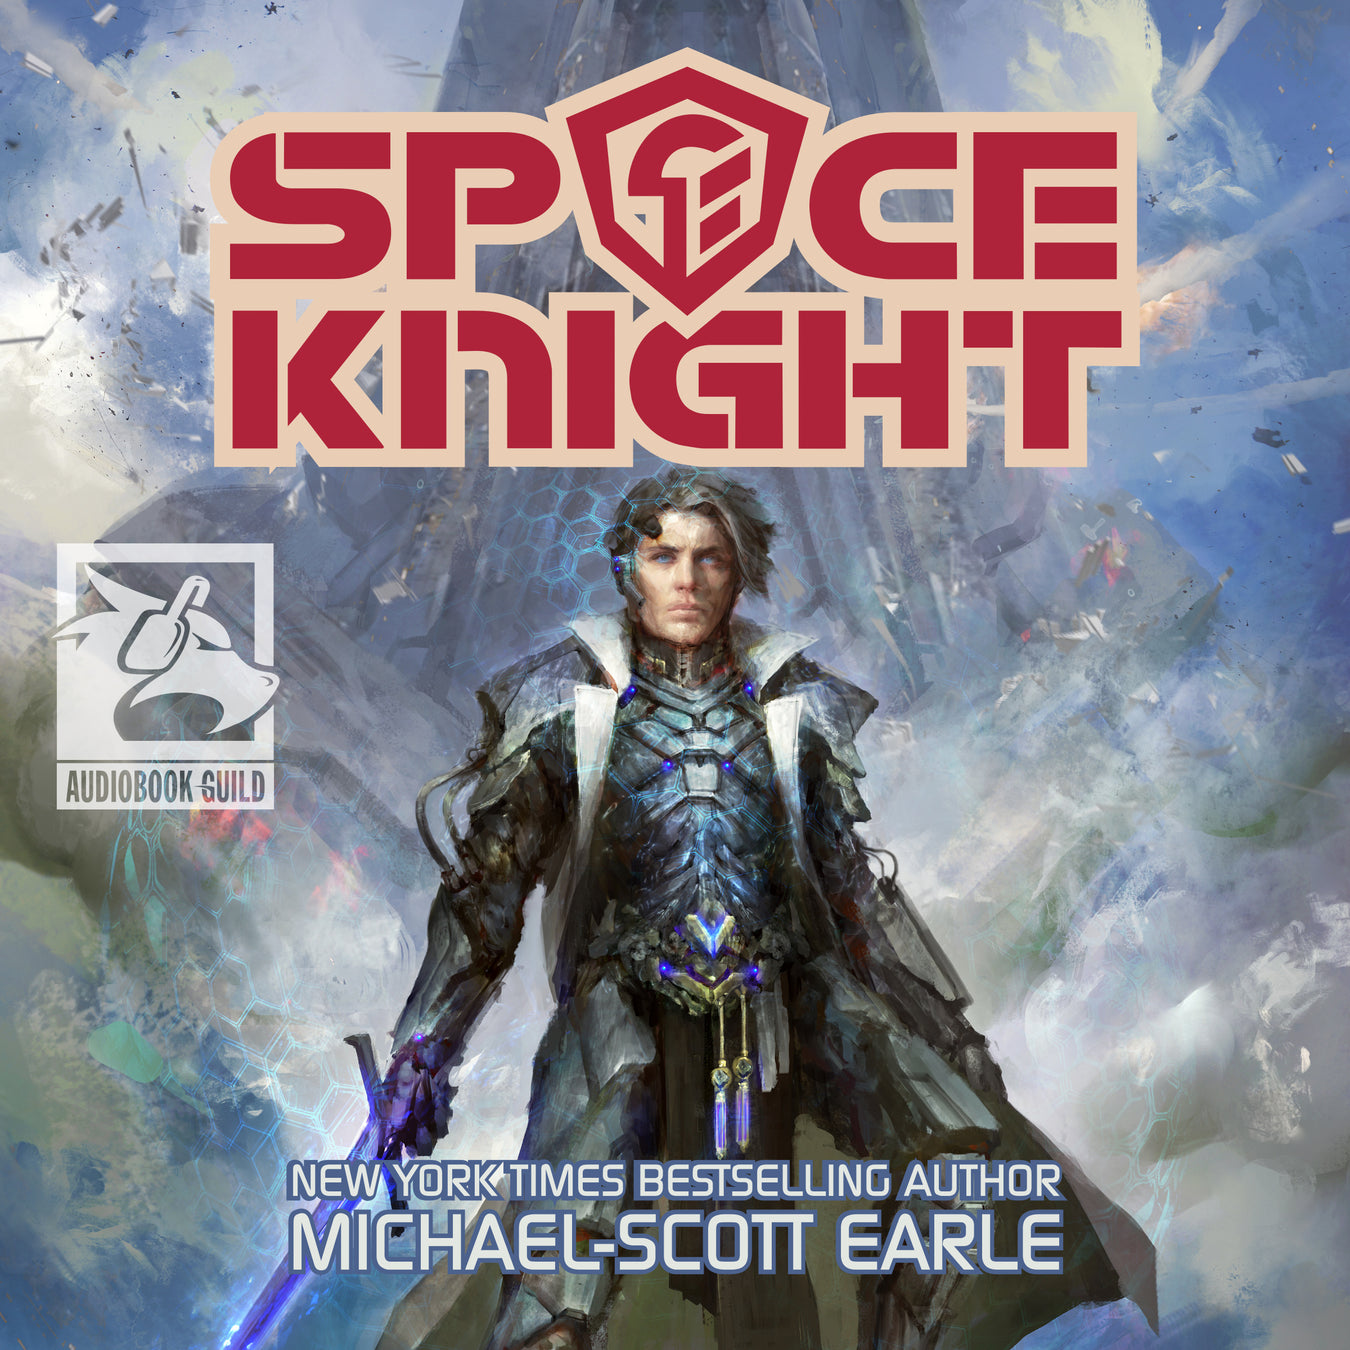 Space Knight by Michael-Scott Earle